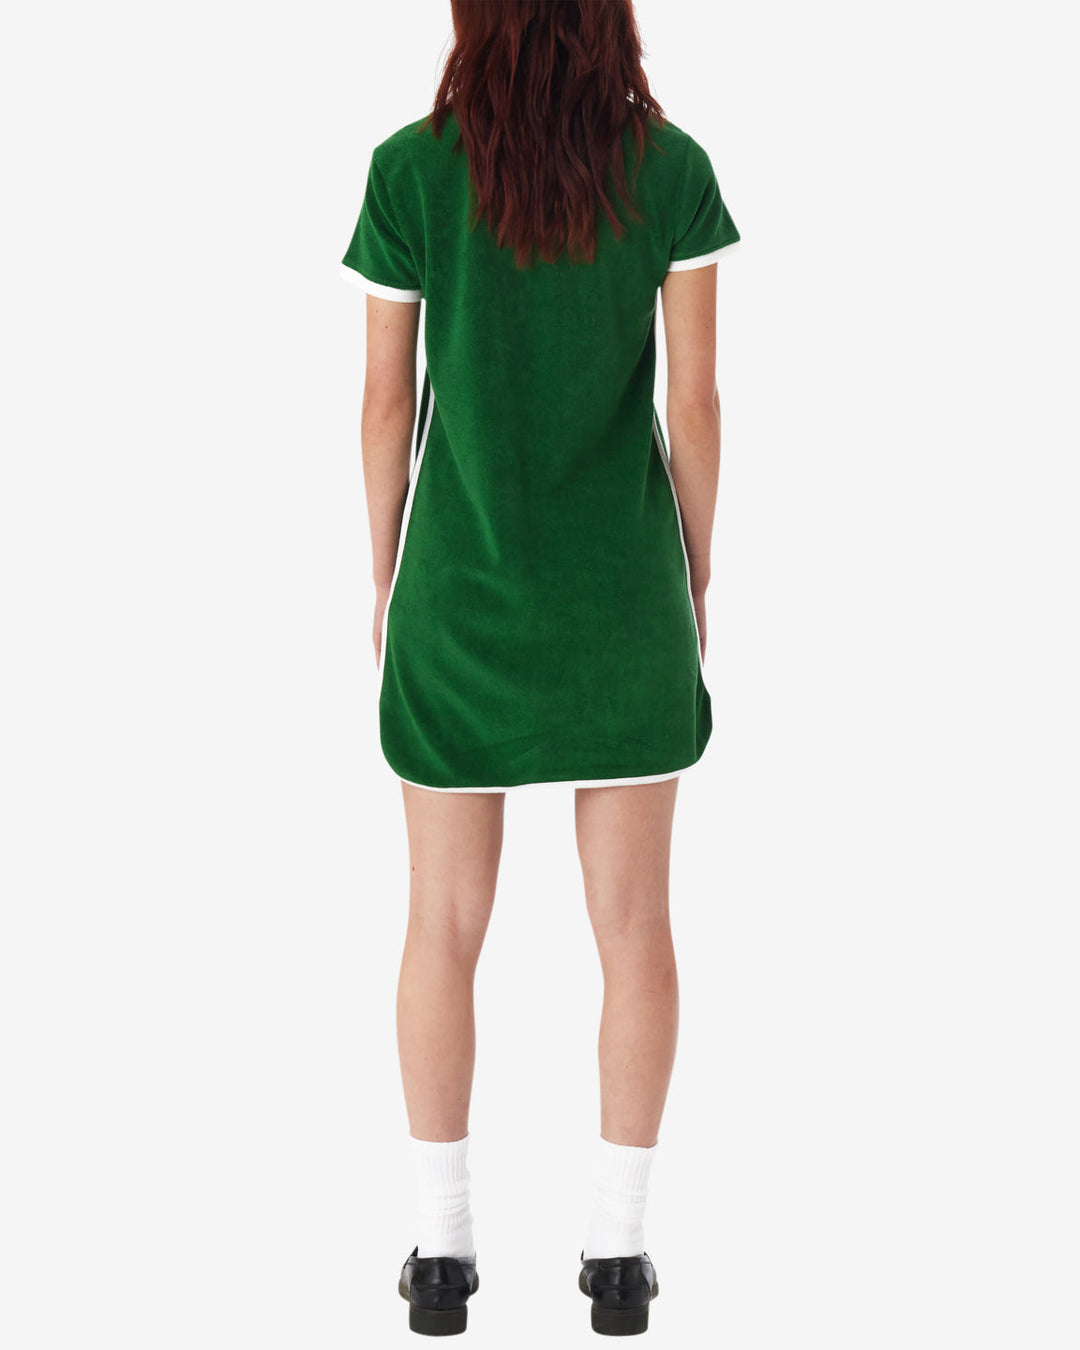 Obey Clare Polo Dress - AGUNDANT GREEN - Sun Diego Boardshop